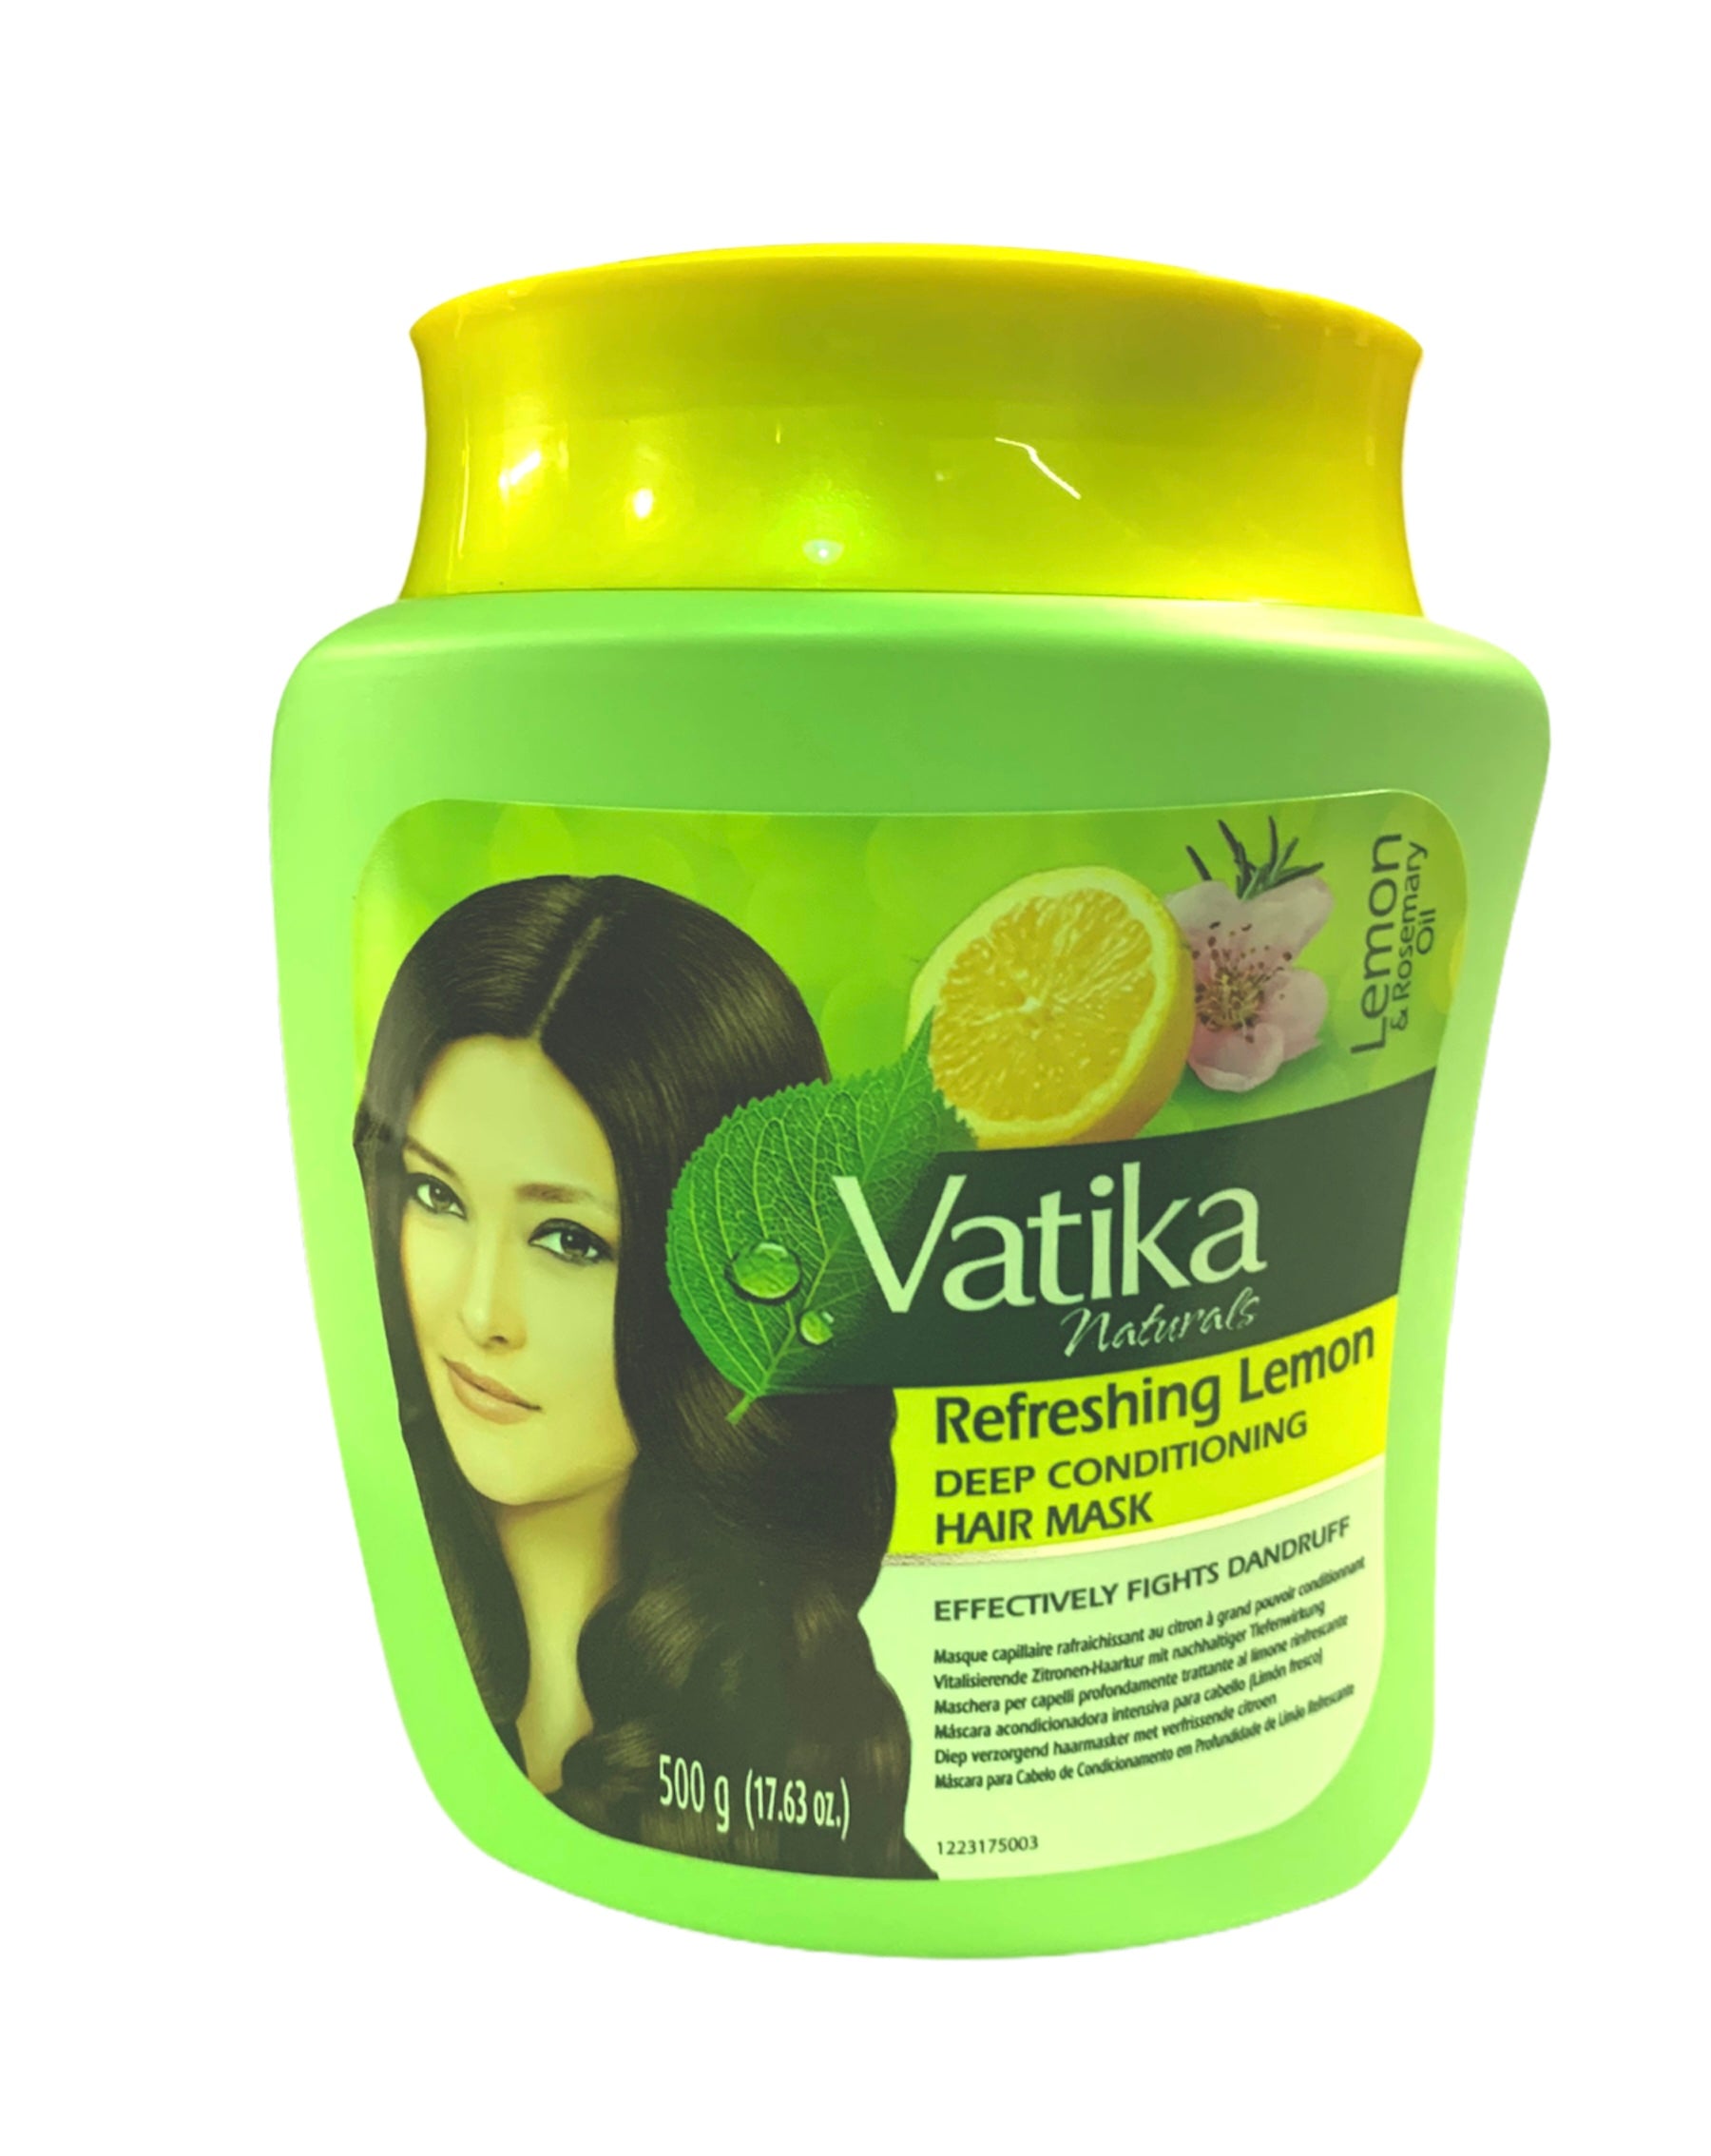 Vatika Naturals Refreshing Lemon Deep Conditioning Hair Mask